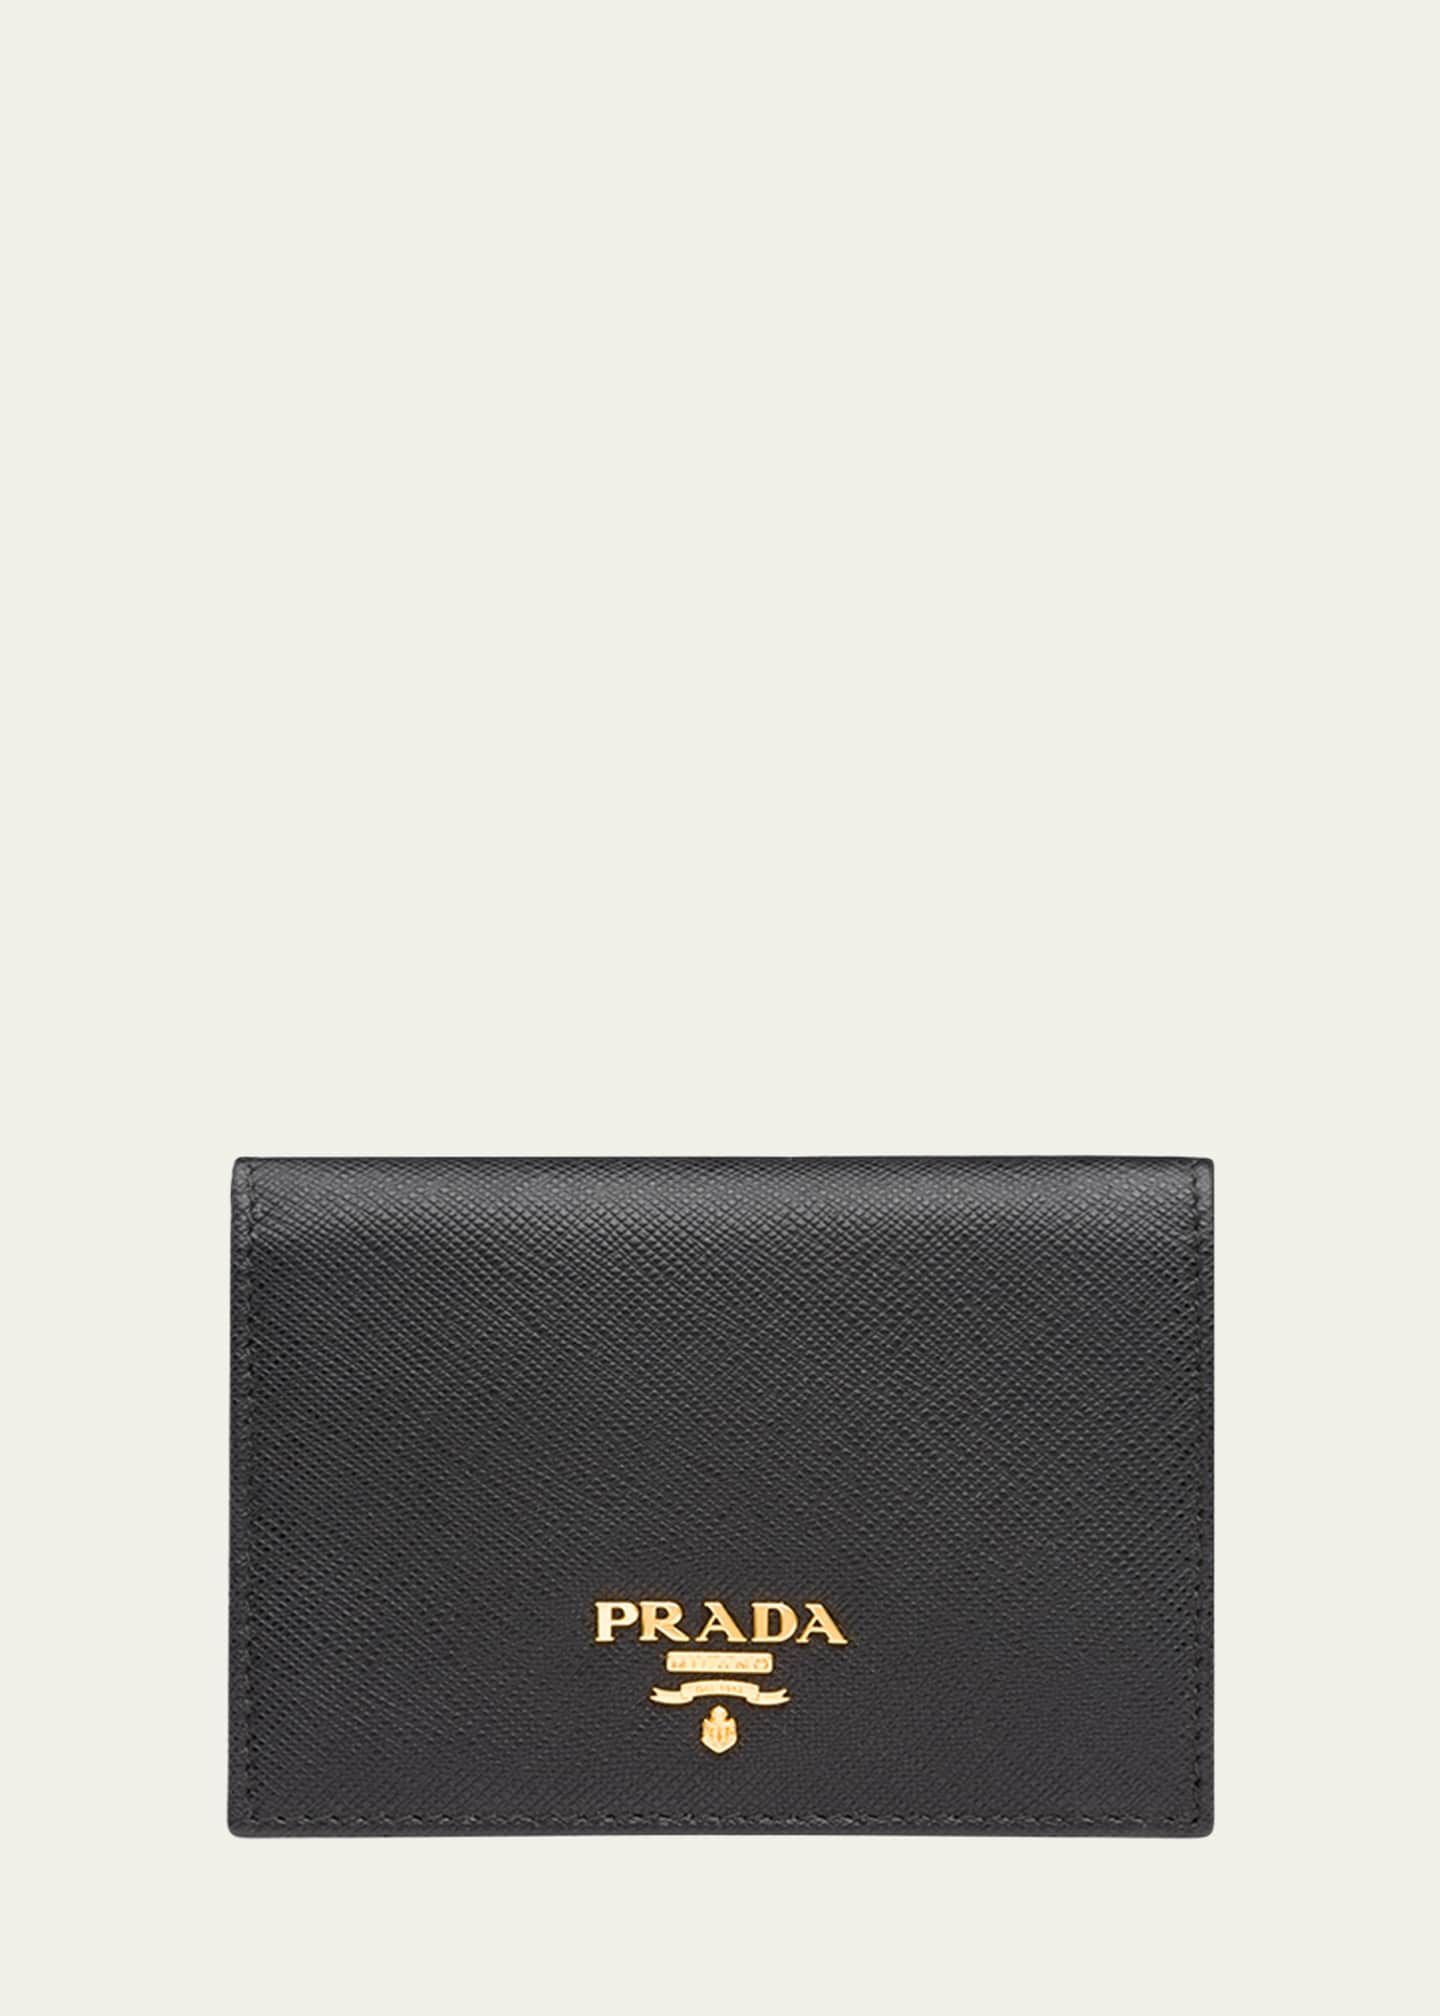 Prada Small Leather Wallet